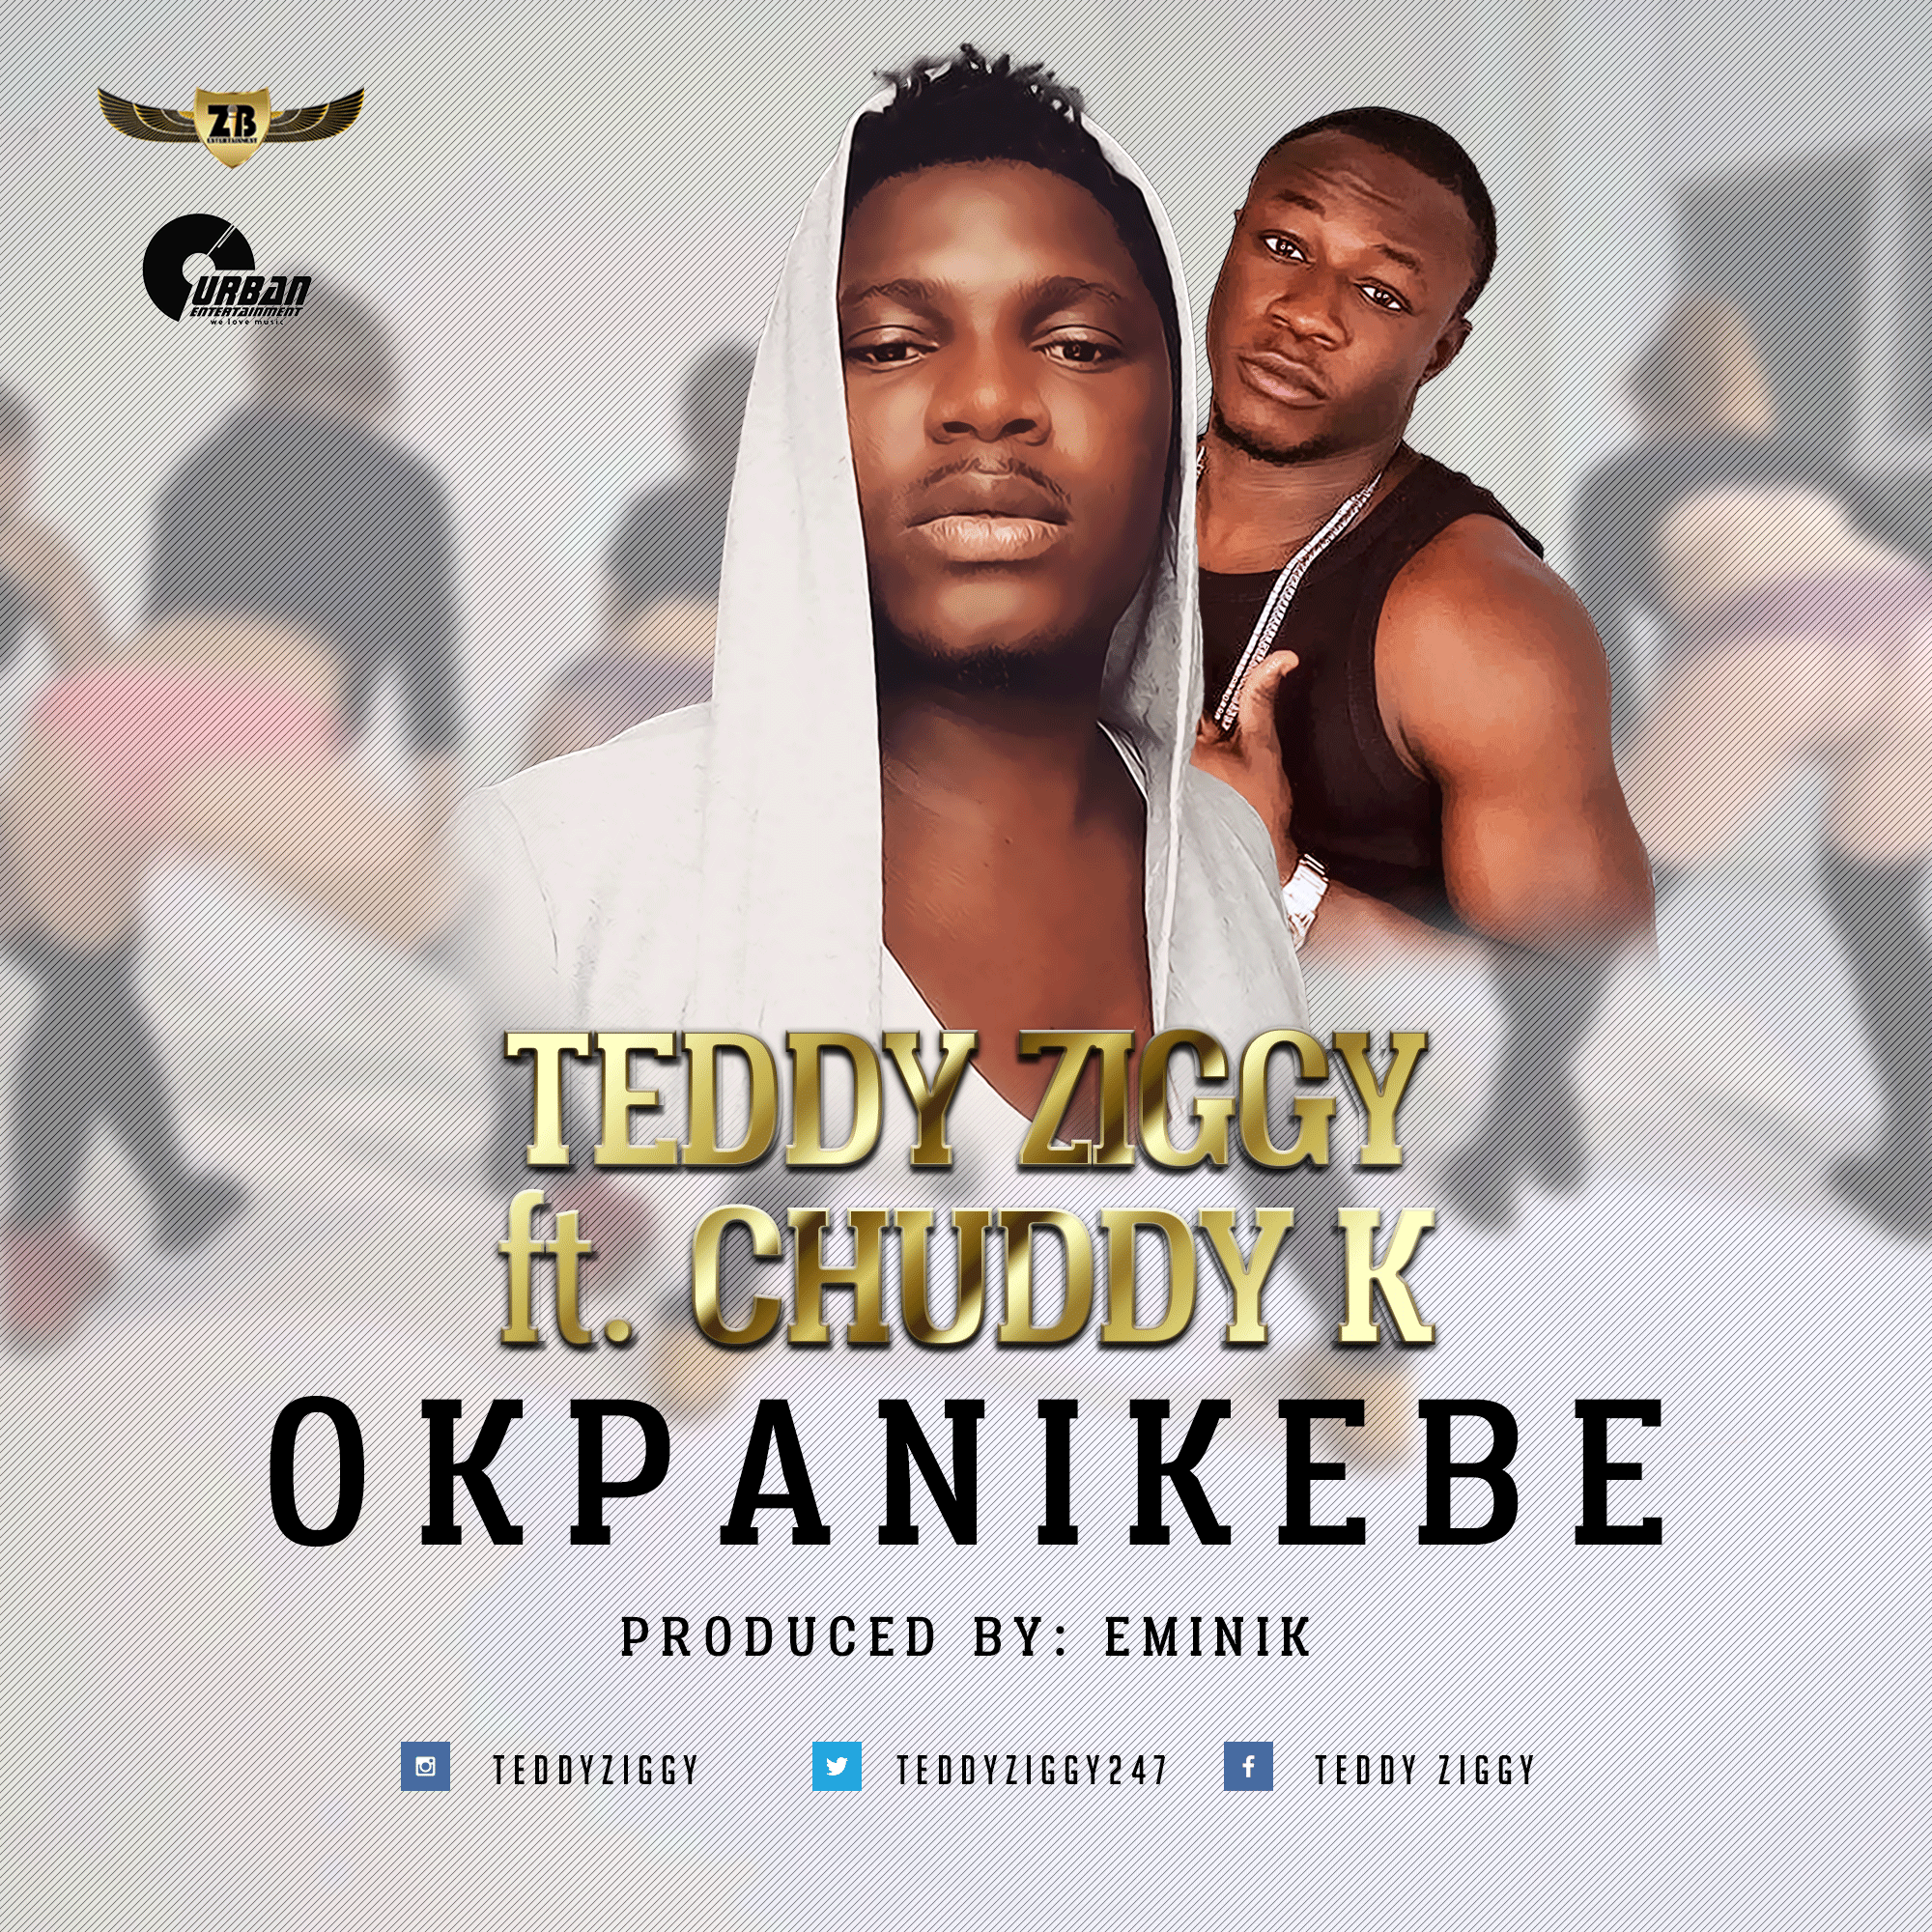 Teddy Ziggy ft. Chuddy K – Okpanikebe (prod. Eminik)